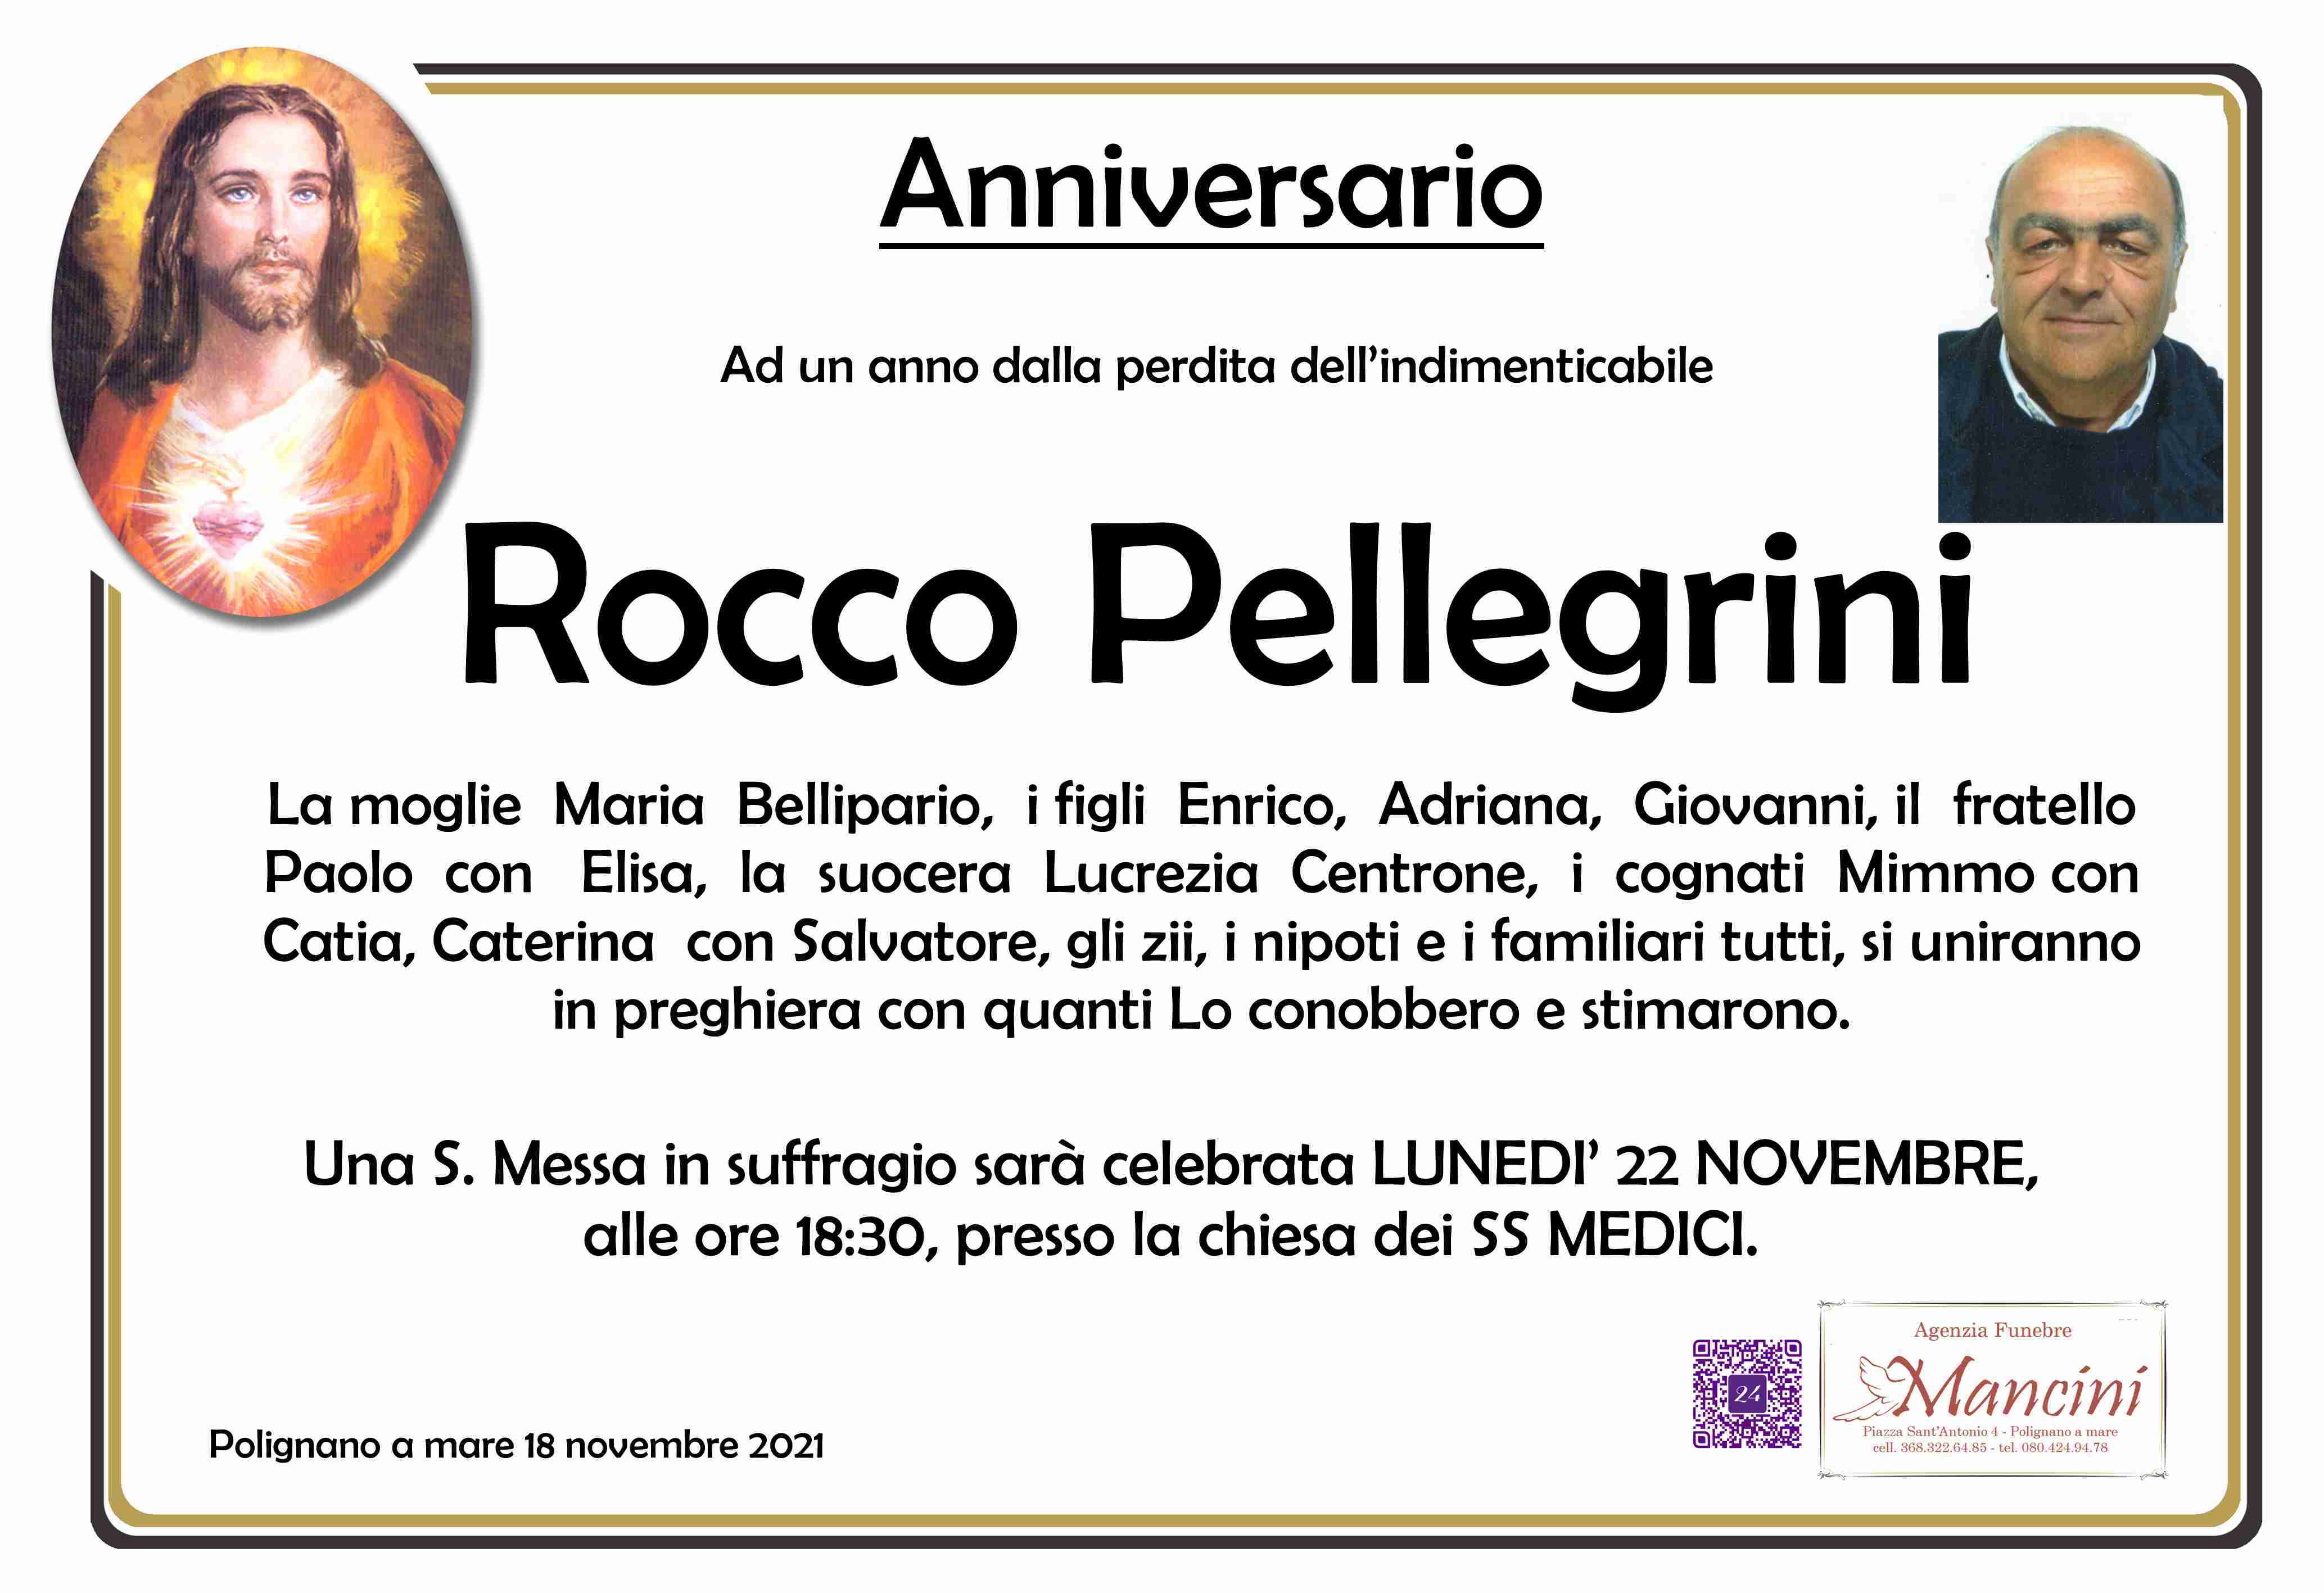 Rocco Pellegrini